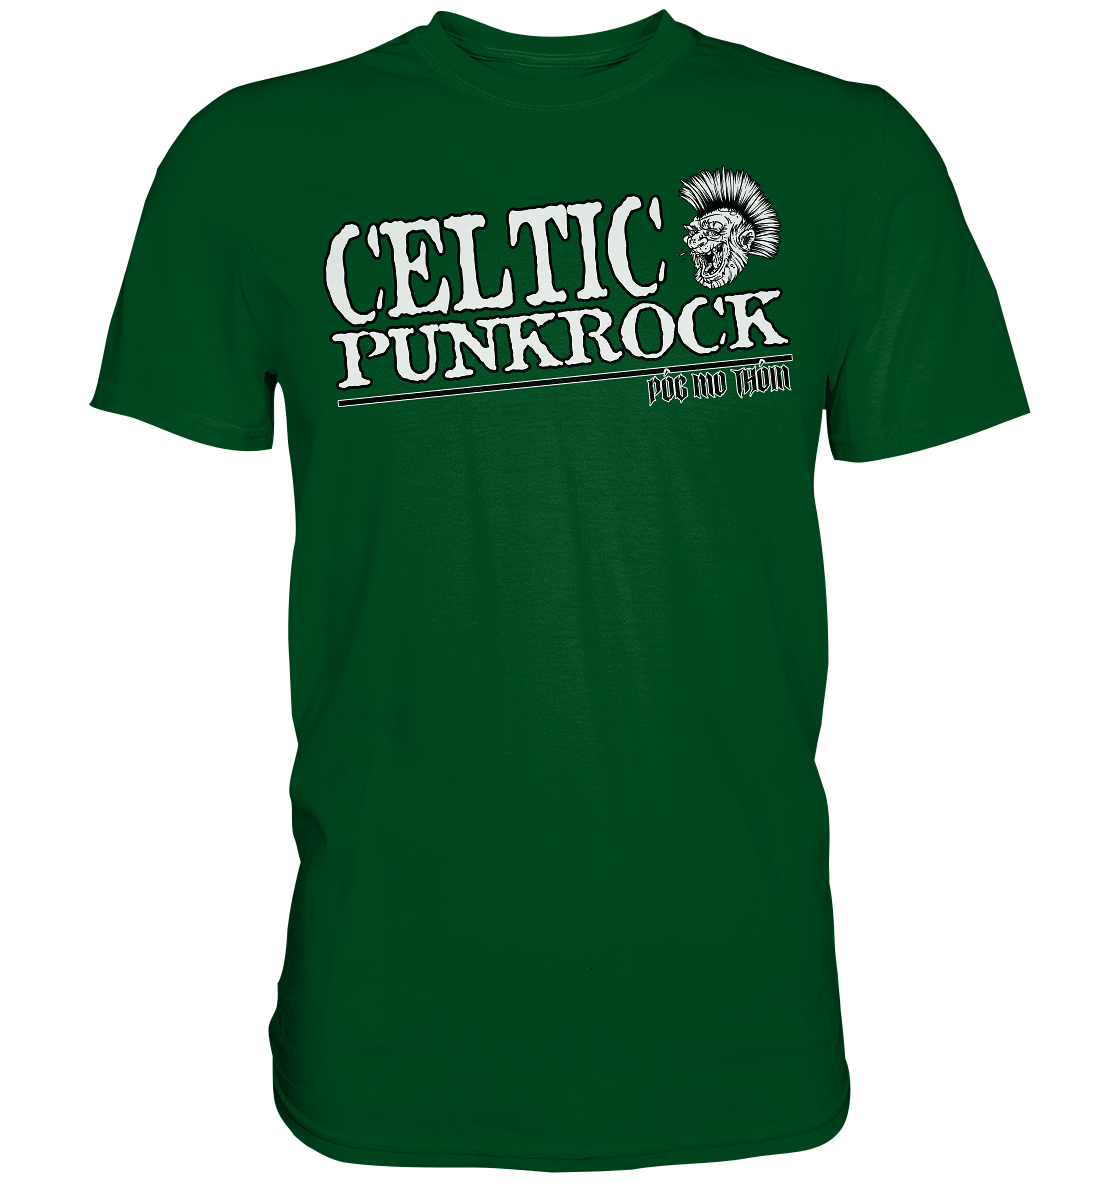 Póg Mo Thóin Streetwear "Celtic Punkrock" - Premium Shirt